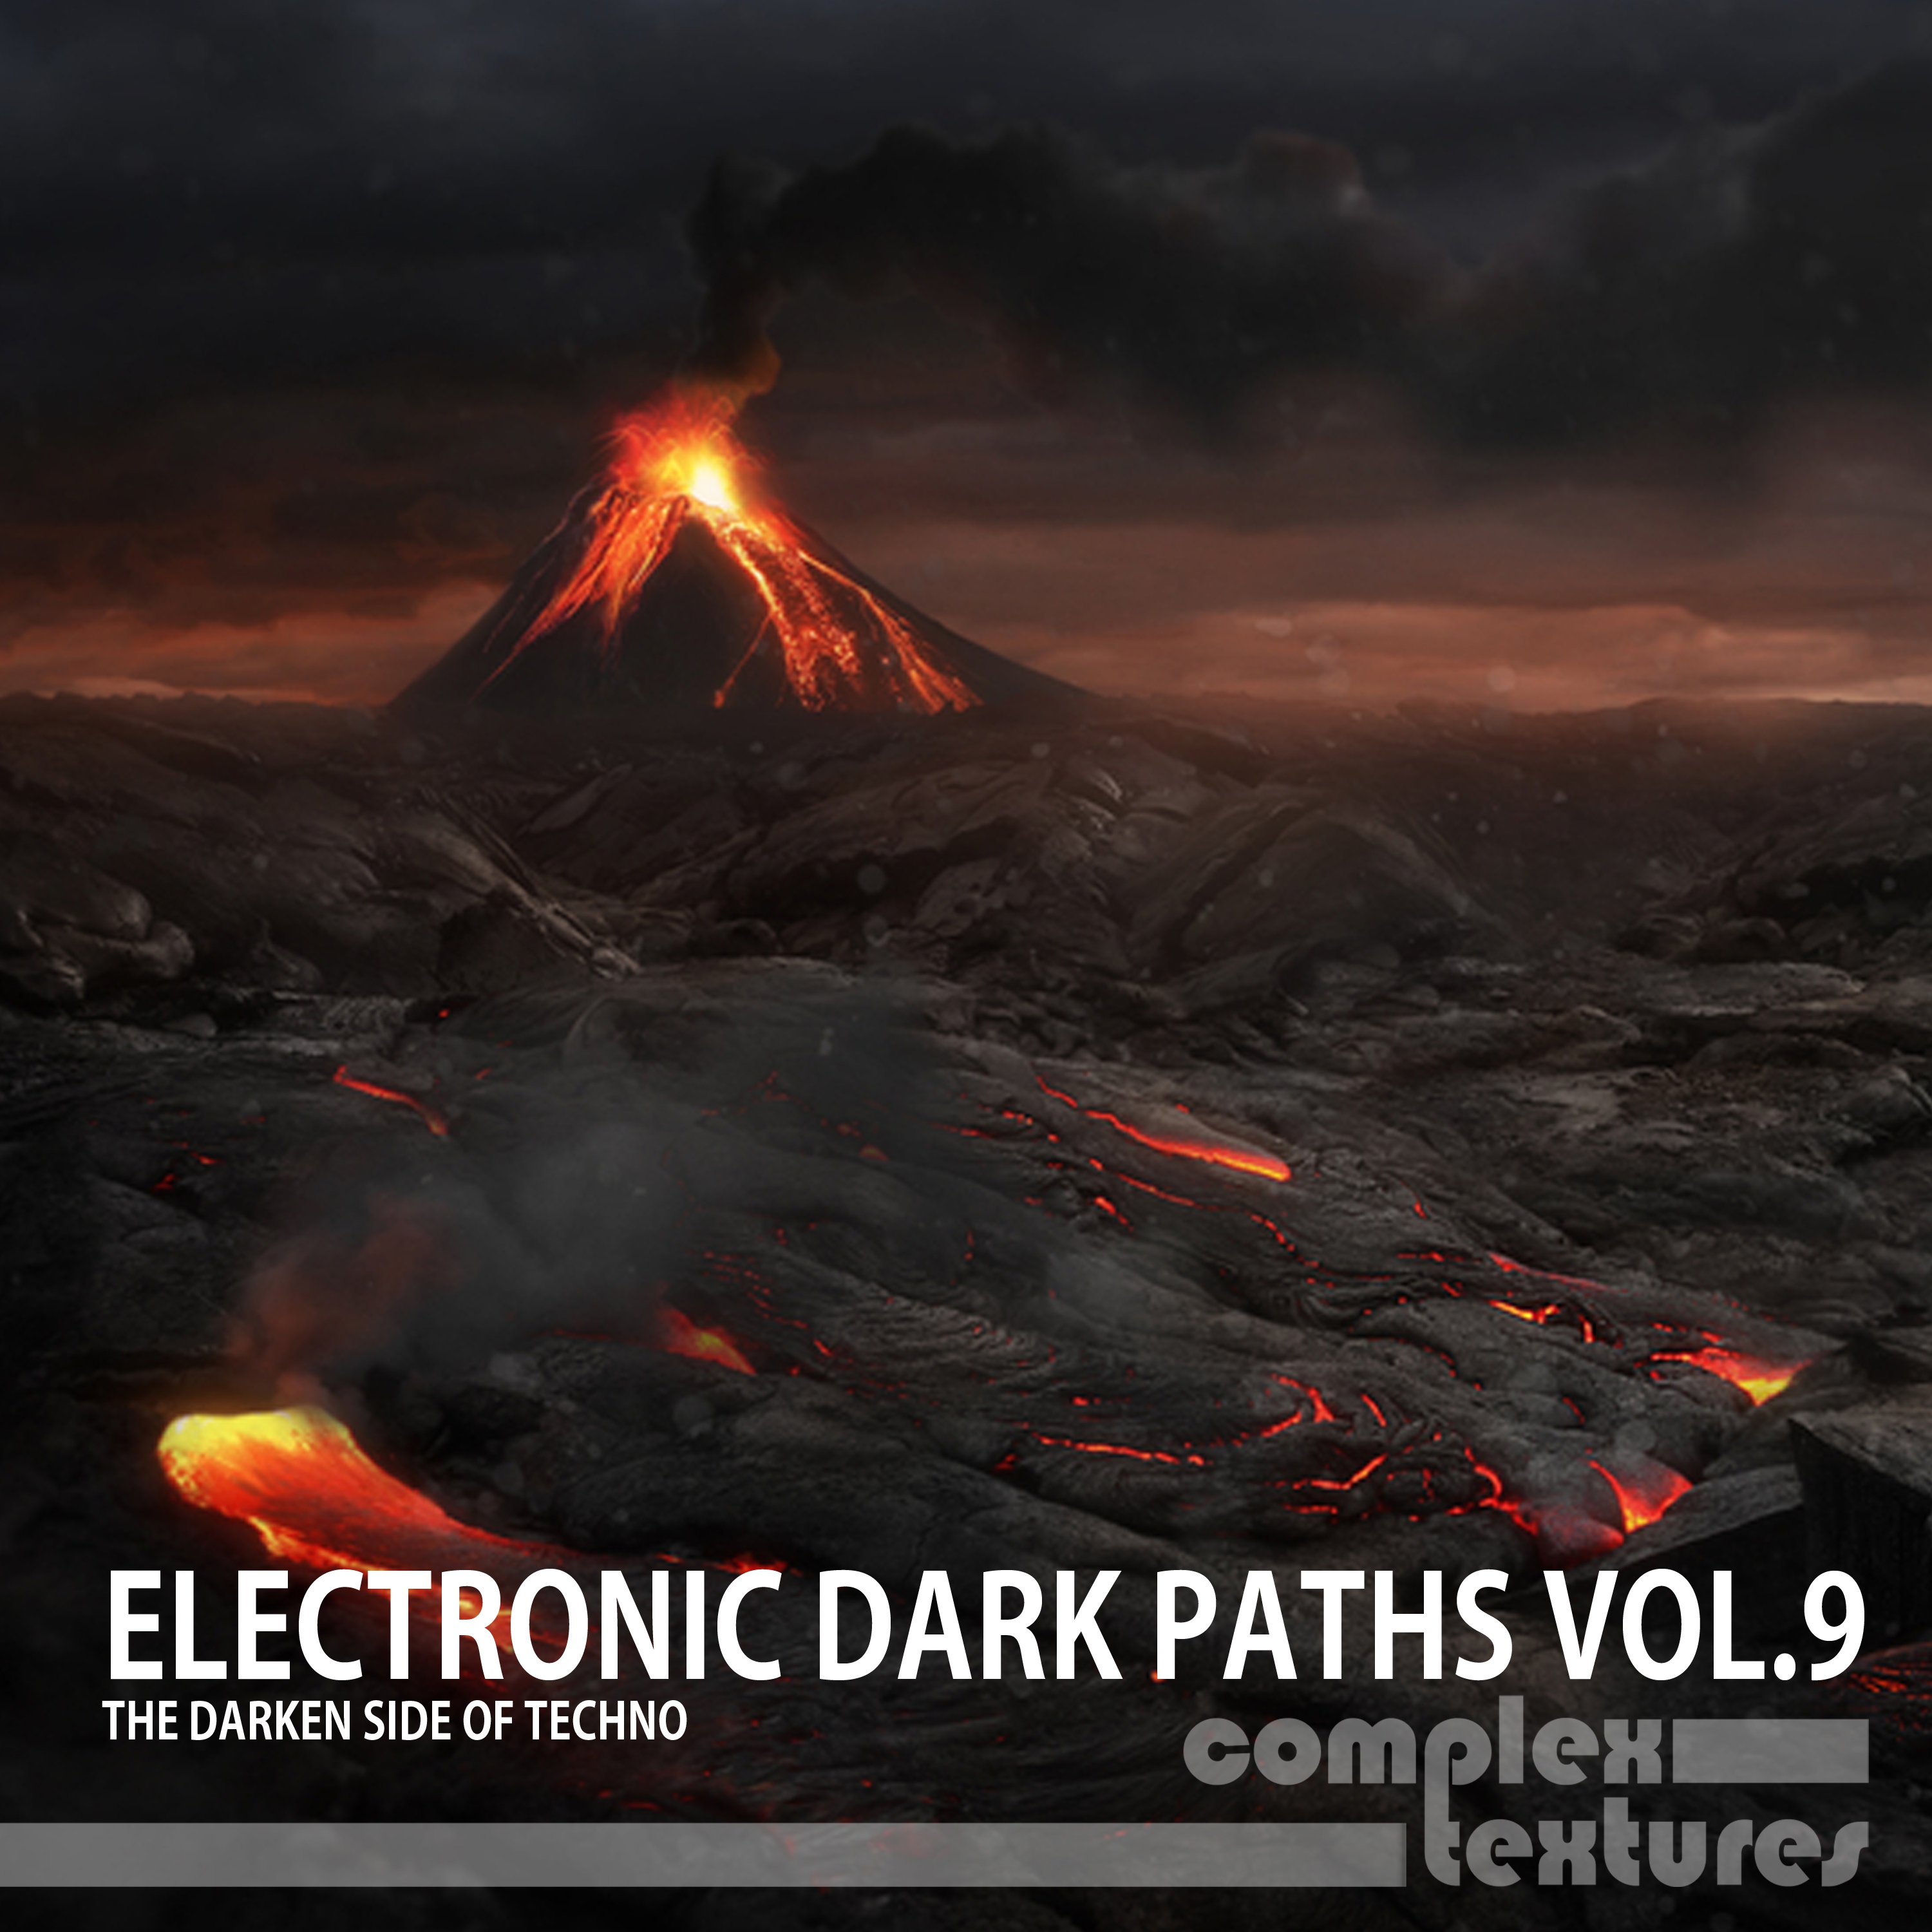 Electronic Dark Paths, Vol. 9 (The Darken Side of Techno)